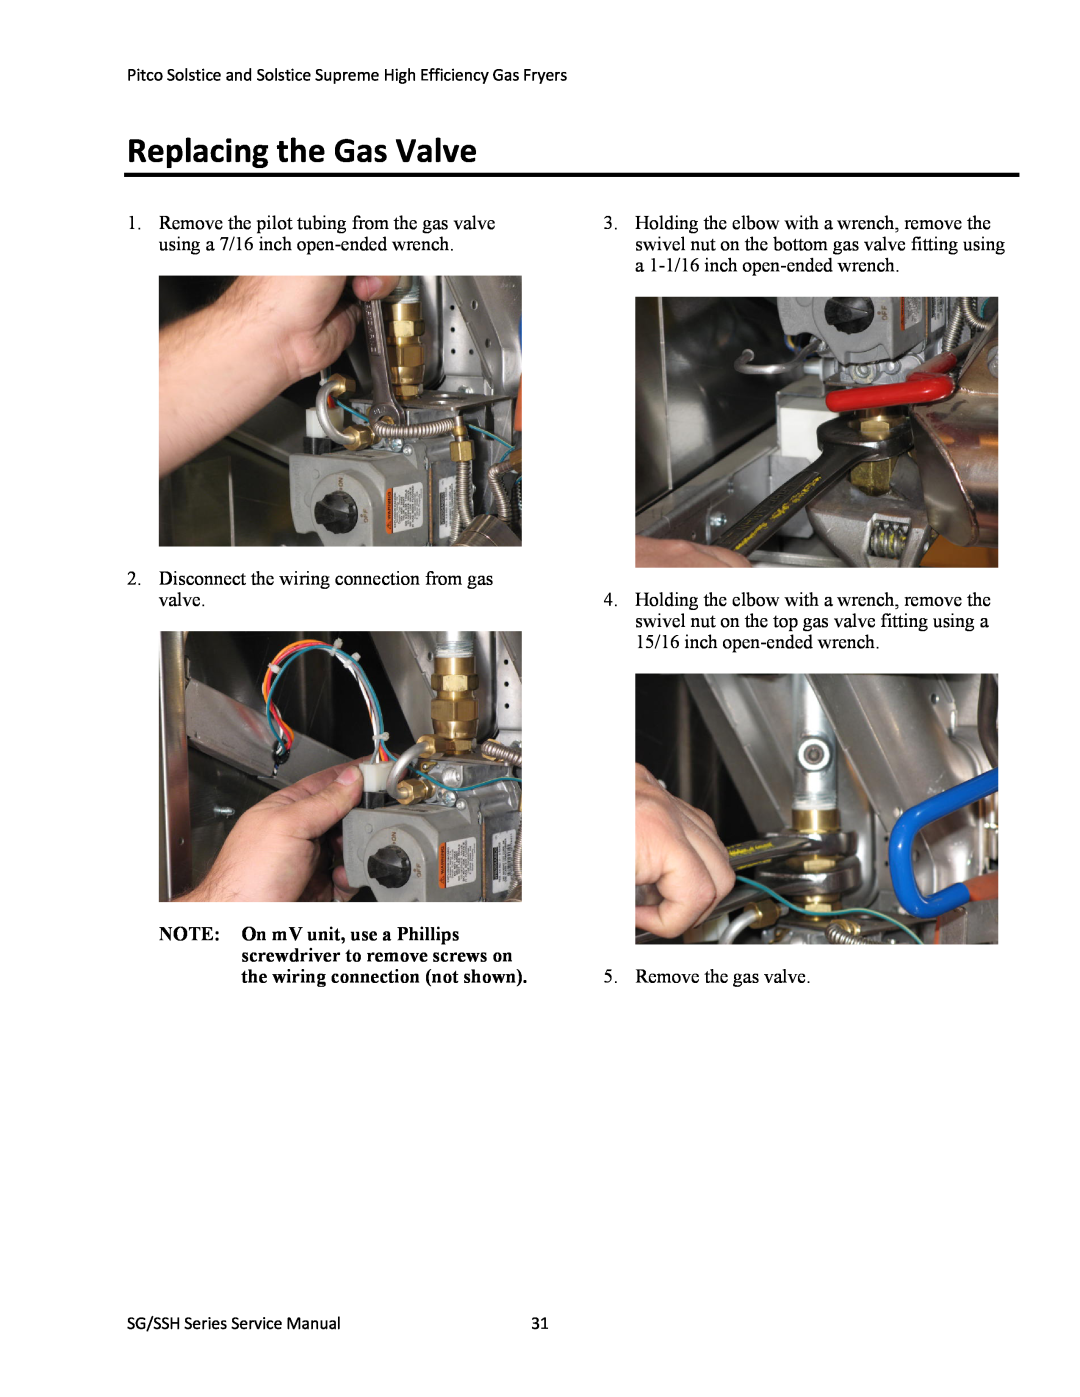 Pitco Frialator L22-345 manual Replacing the Gas Valve 